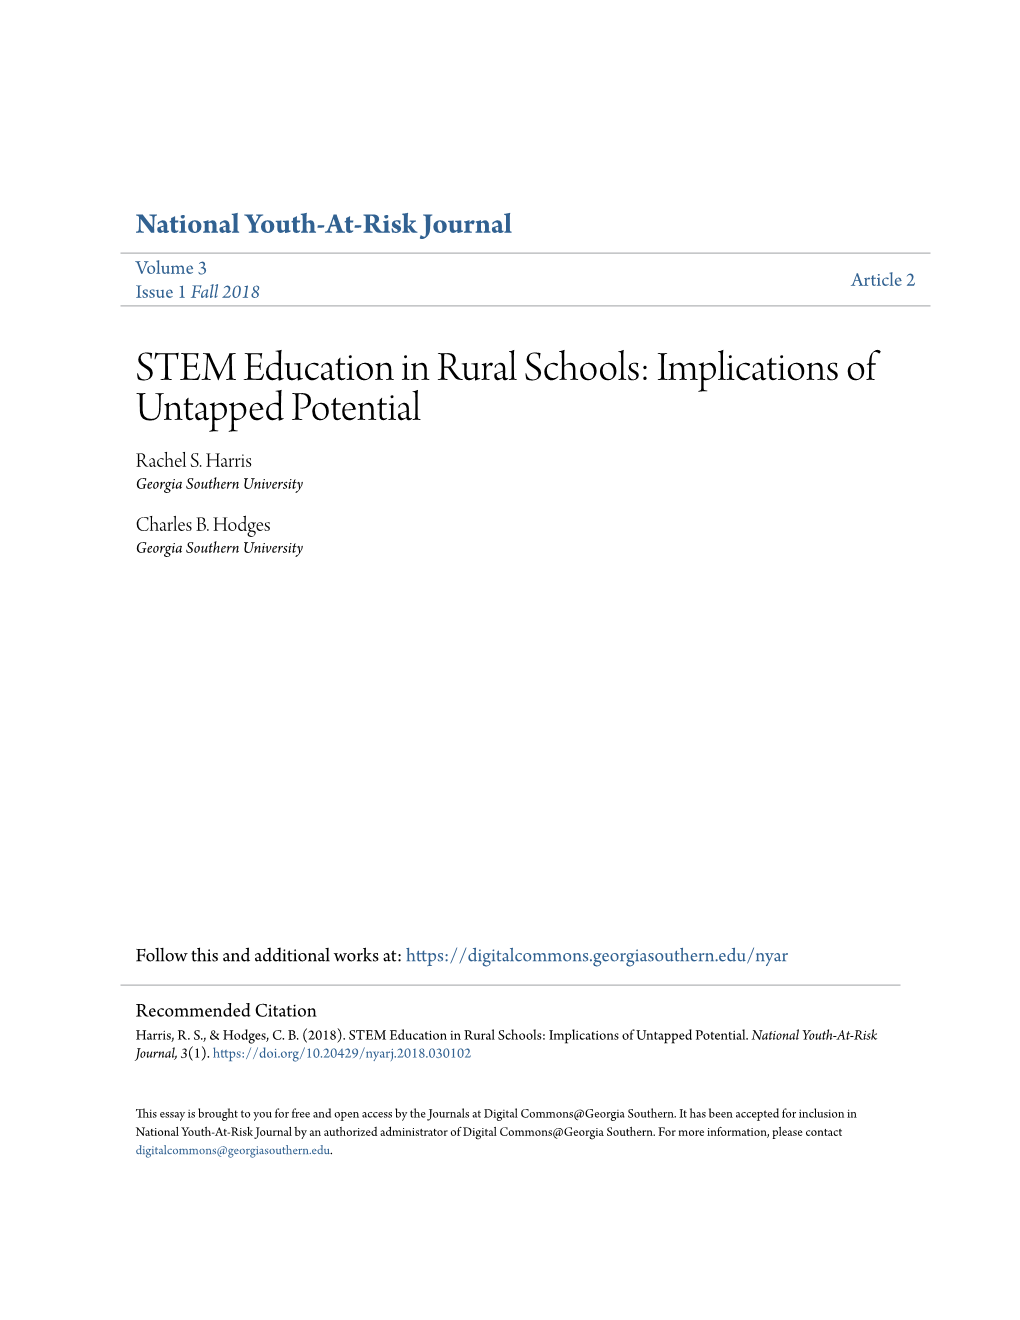 STEM Education in Rural Schools: Implications of Untapped Potential Rachel S